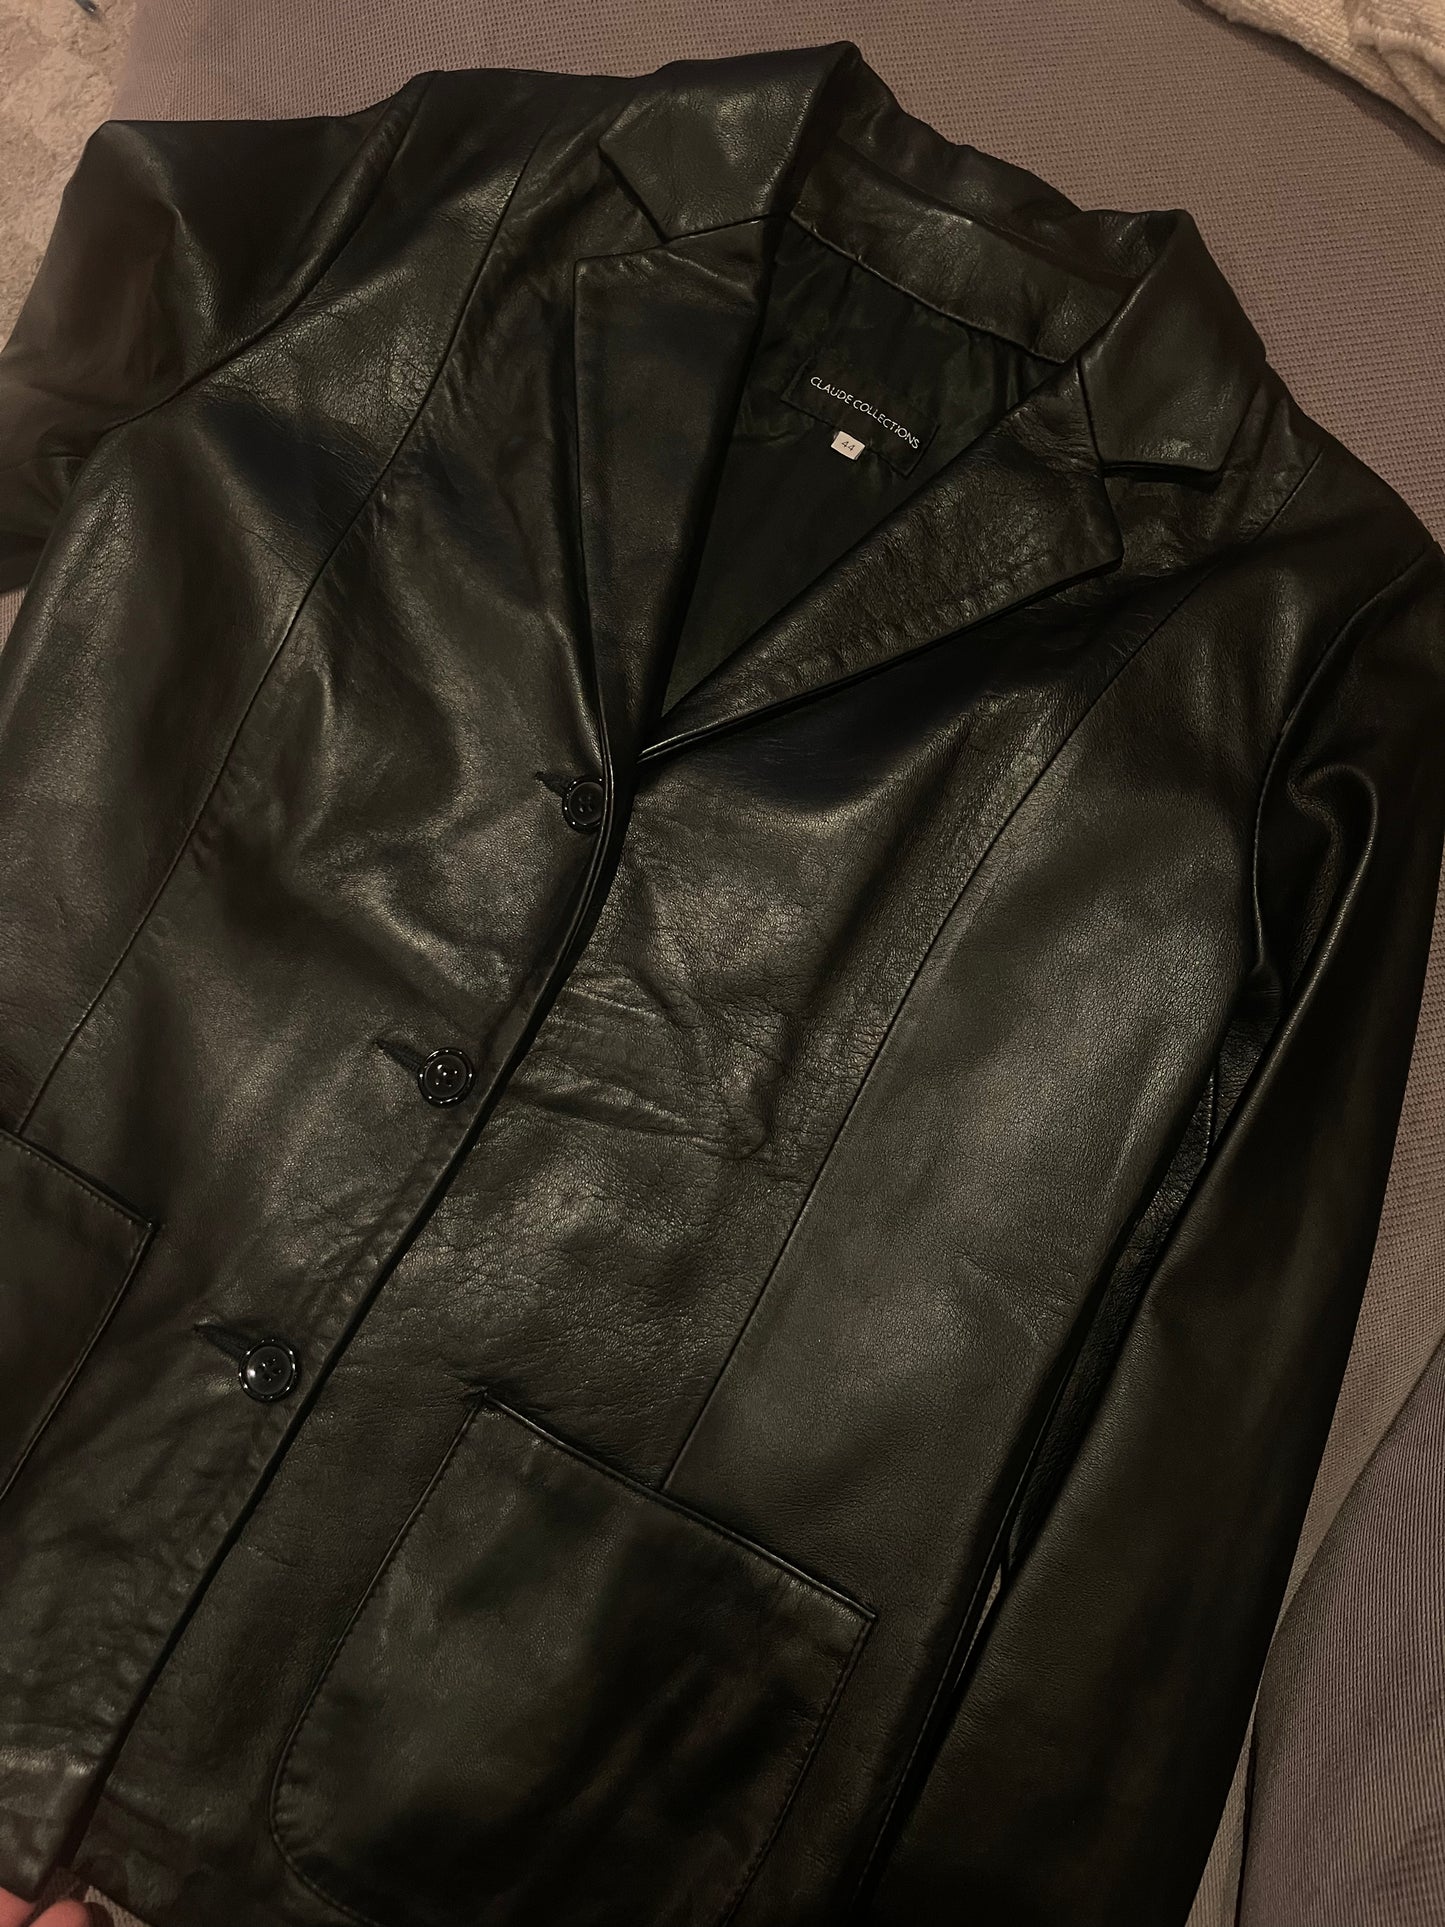 Indispensabile leather blazer